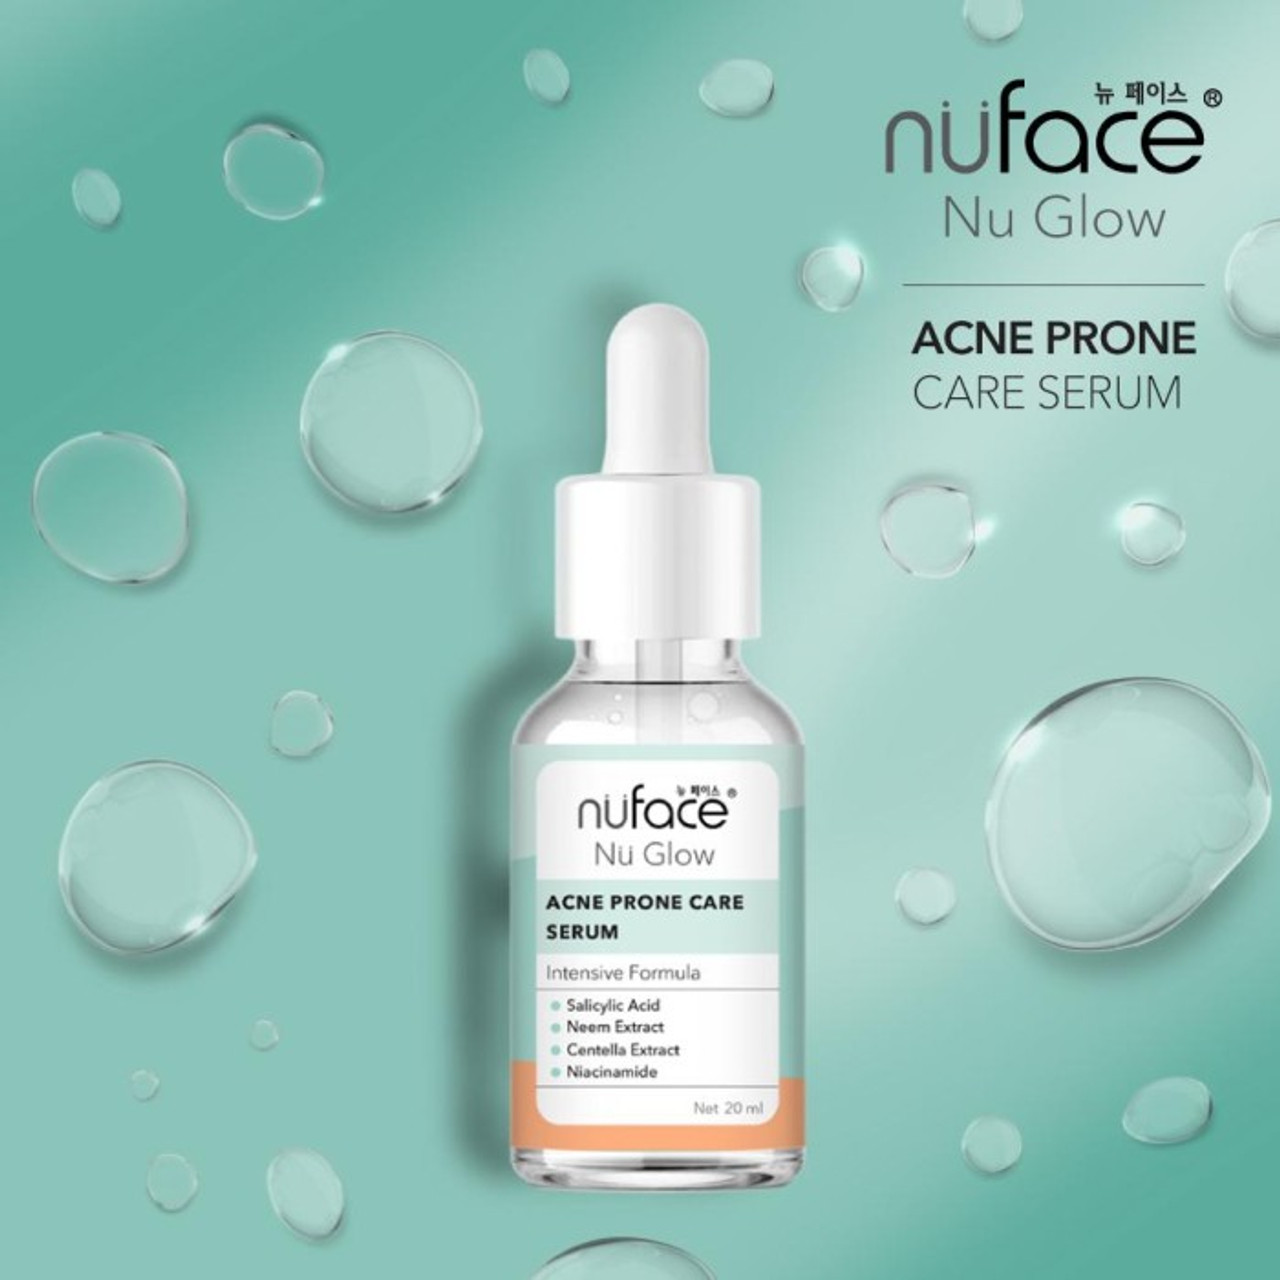 NuFace New Glow Acne Pron Care Serum 20ml 